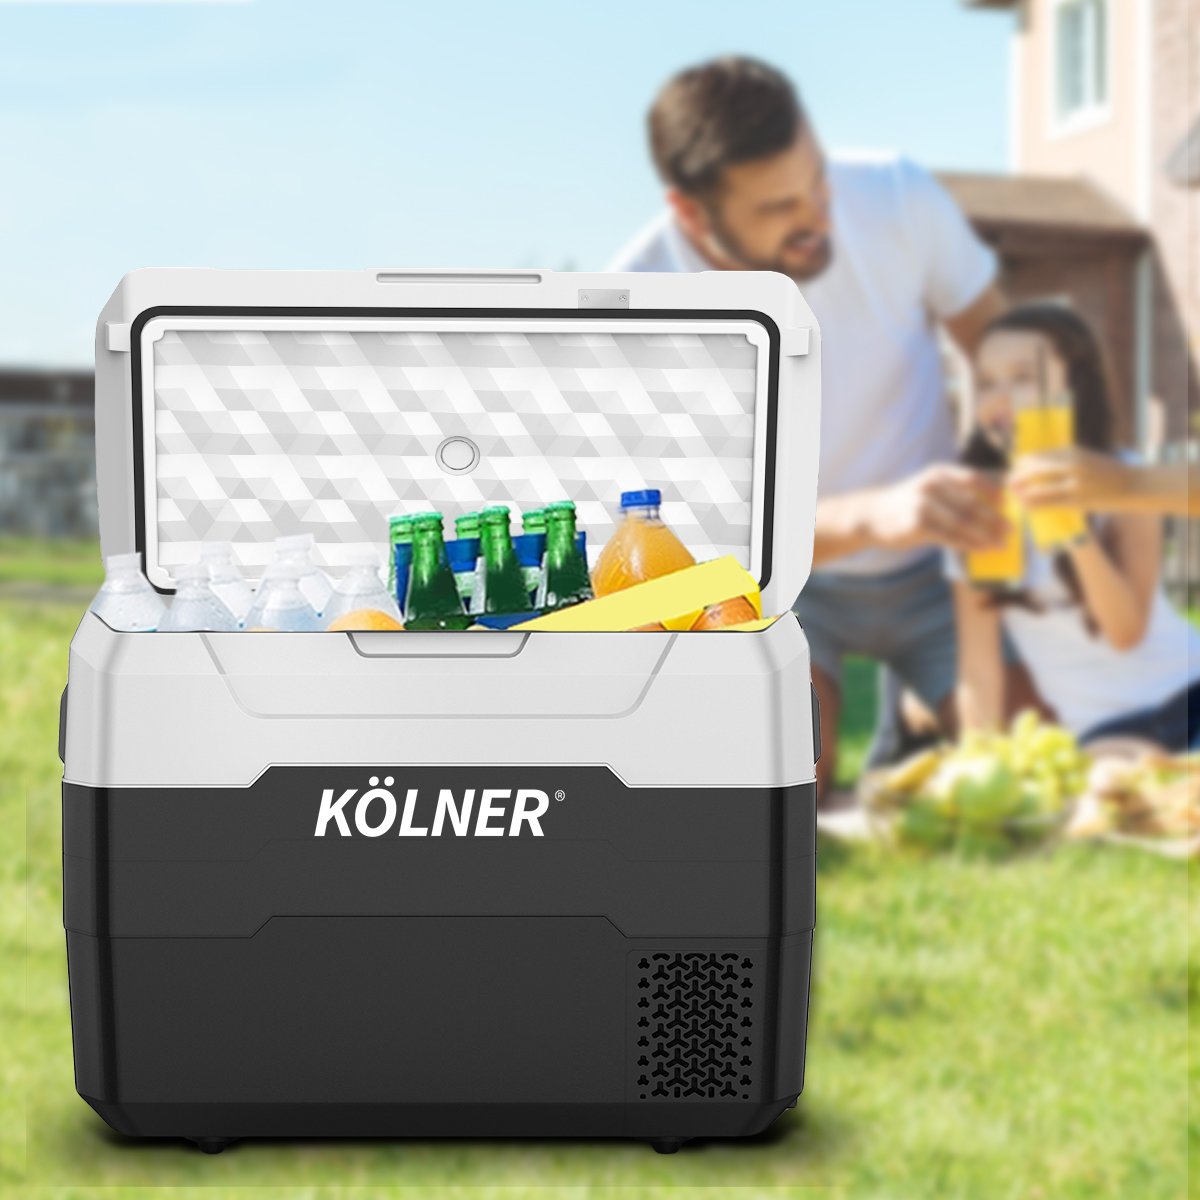 Kolner 40L Portable Fridge Cooler Freezer Refrigerator w/ Trolley